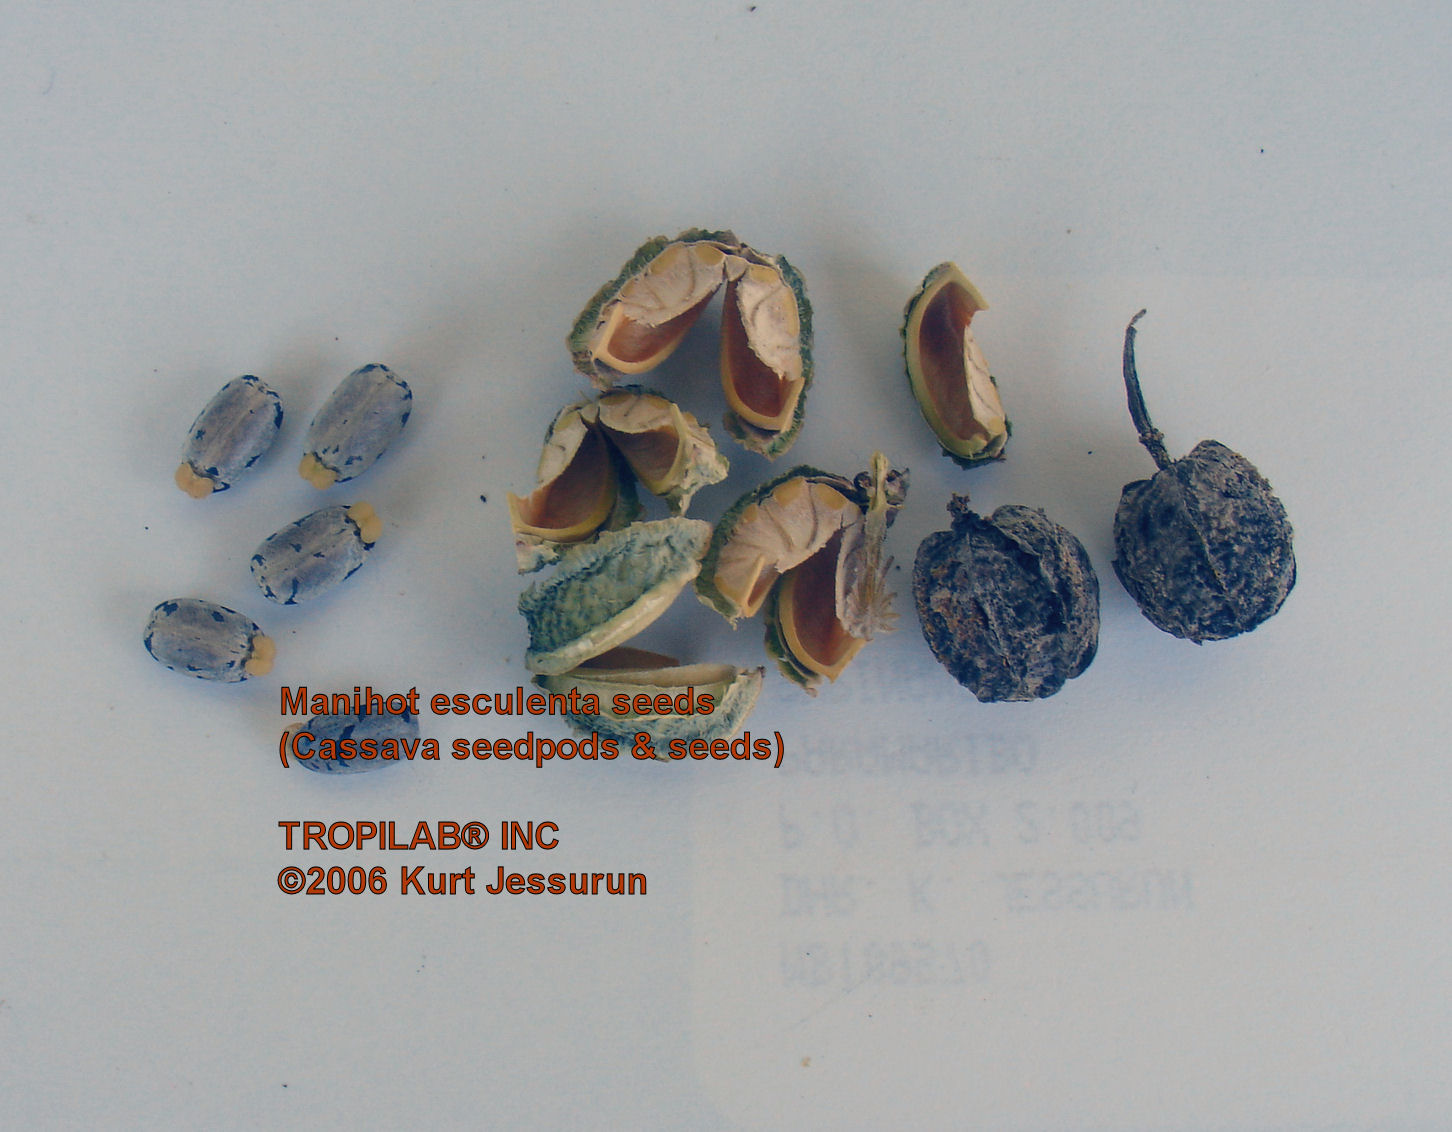 Manihot esculenta - Cassava seedpod & seeds